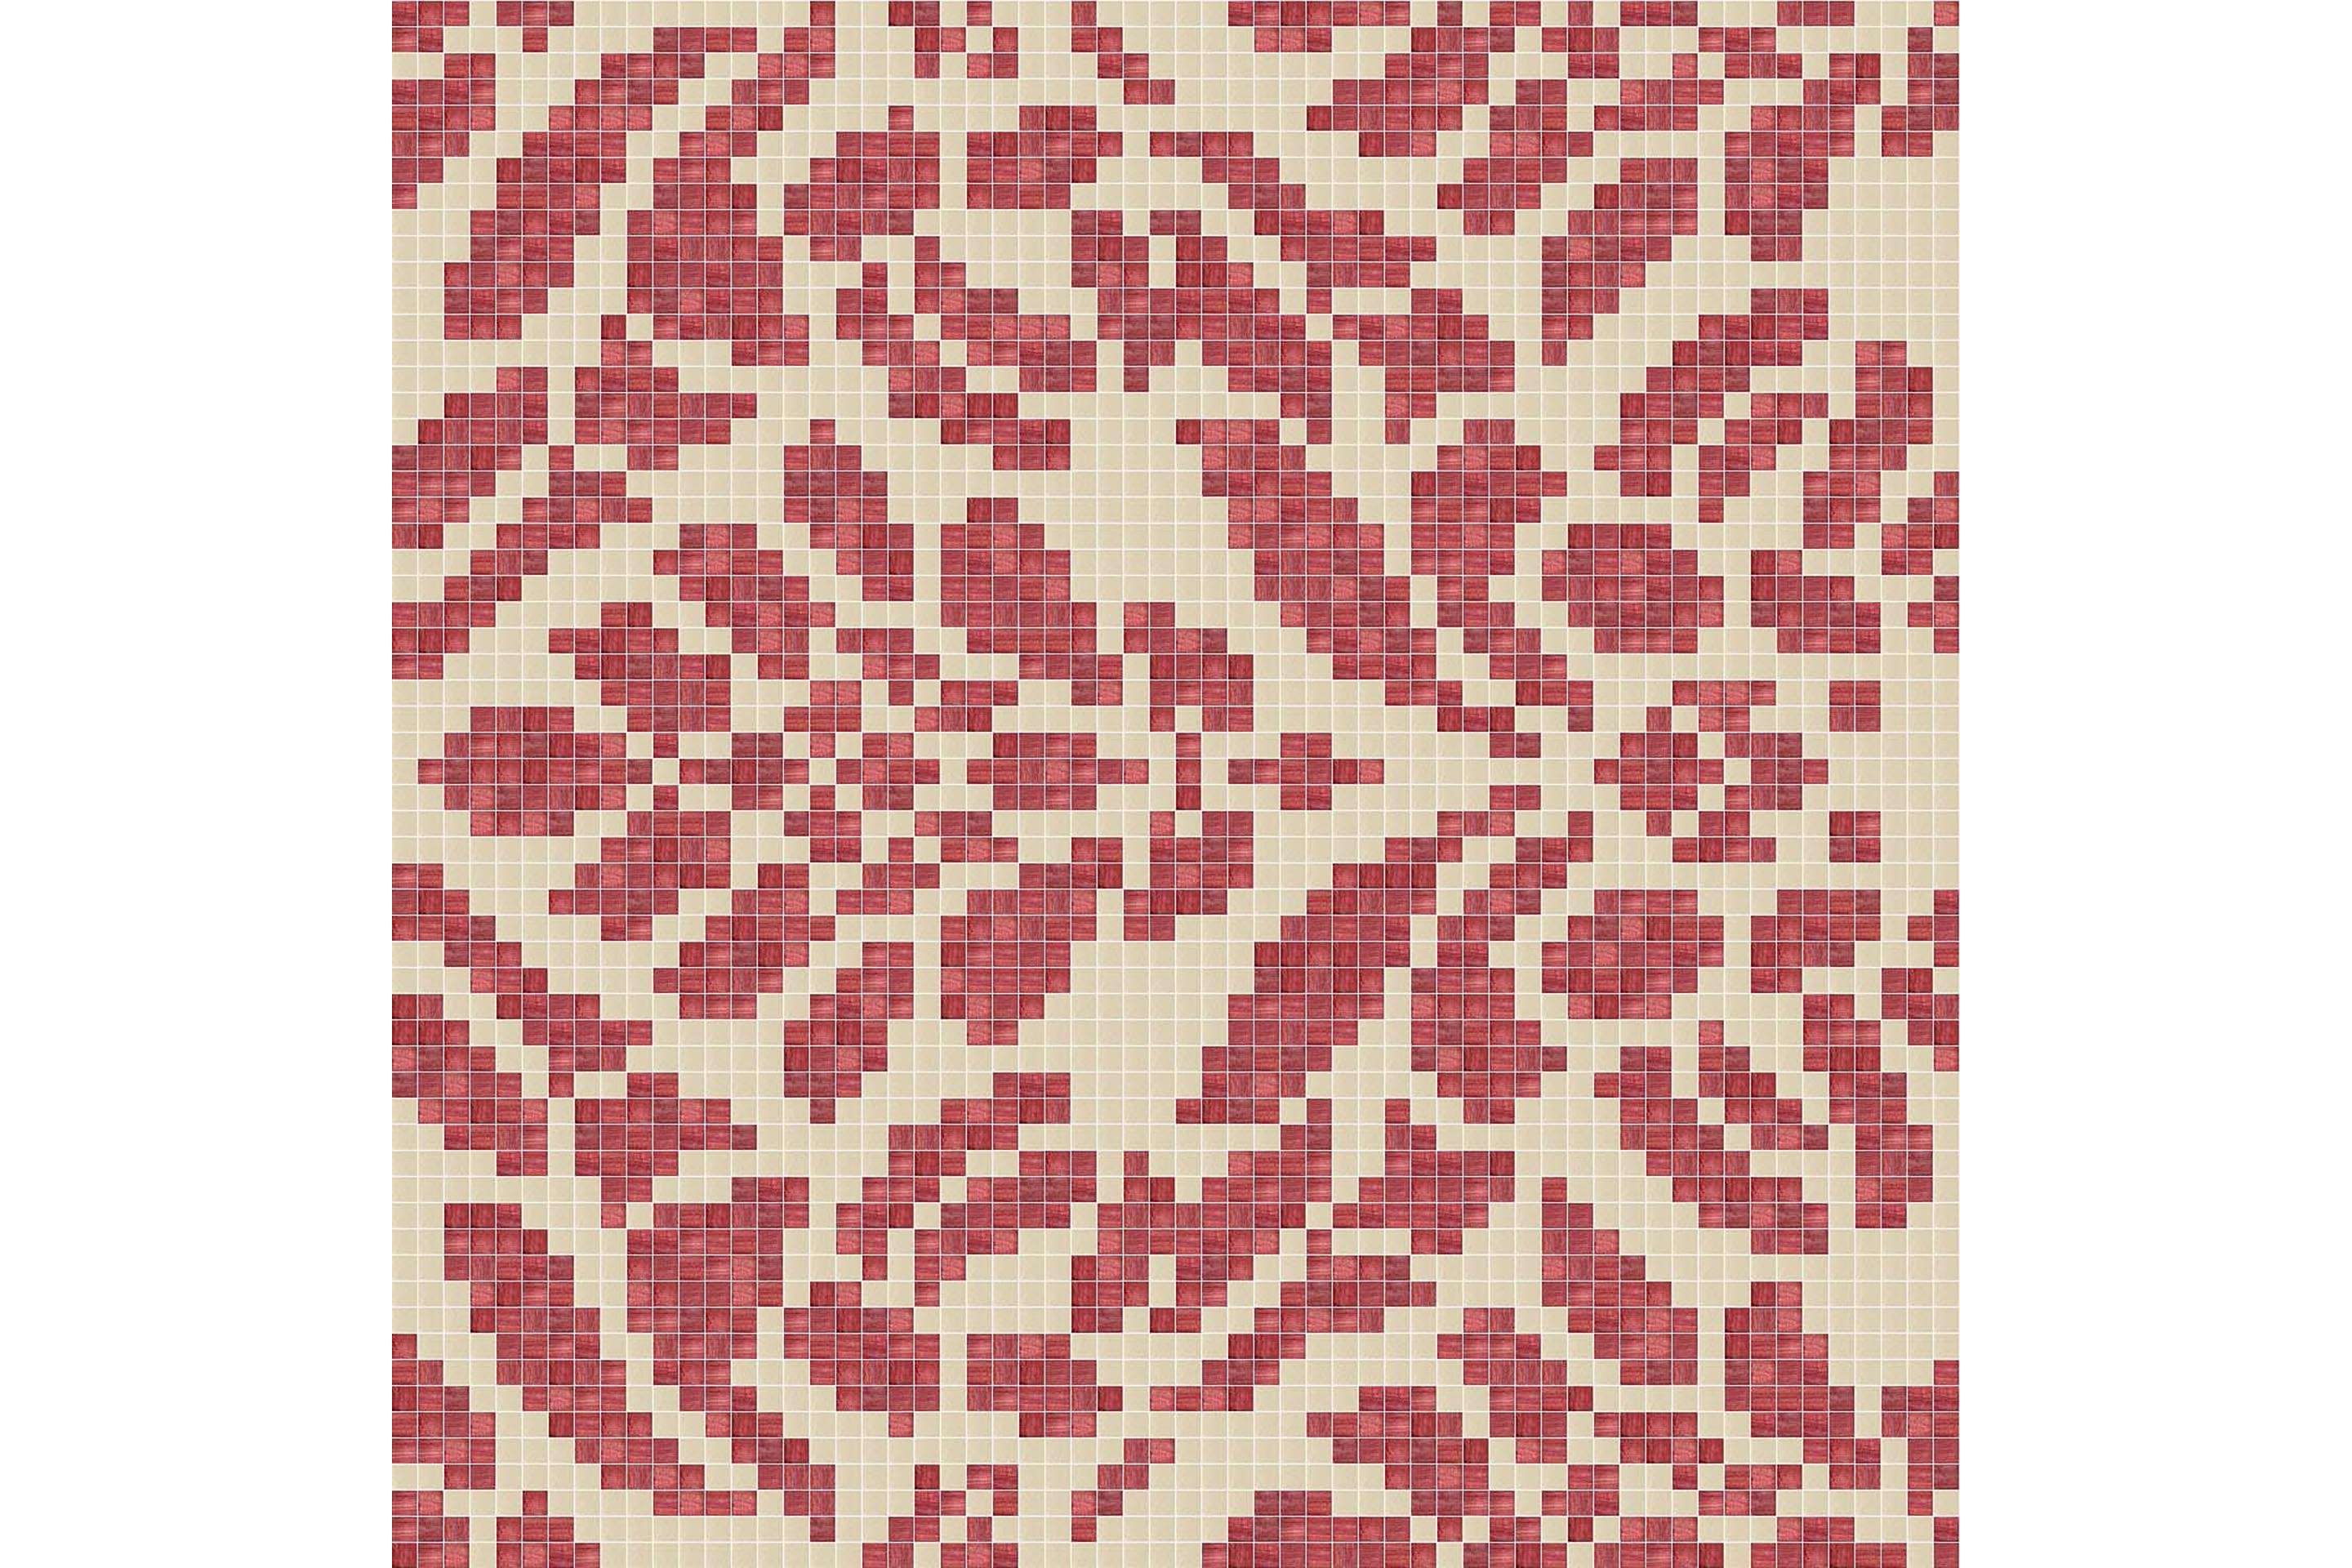 Мозаика Trend Wallpaper (Волпейпер) Floral 1